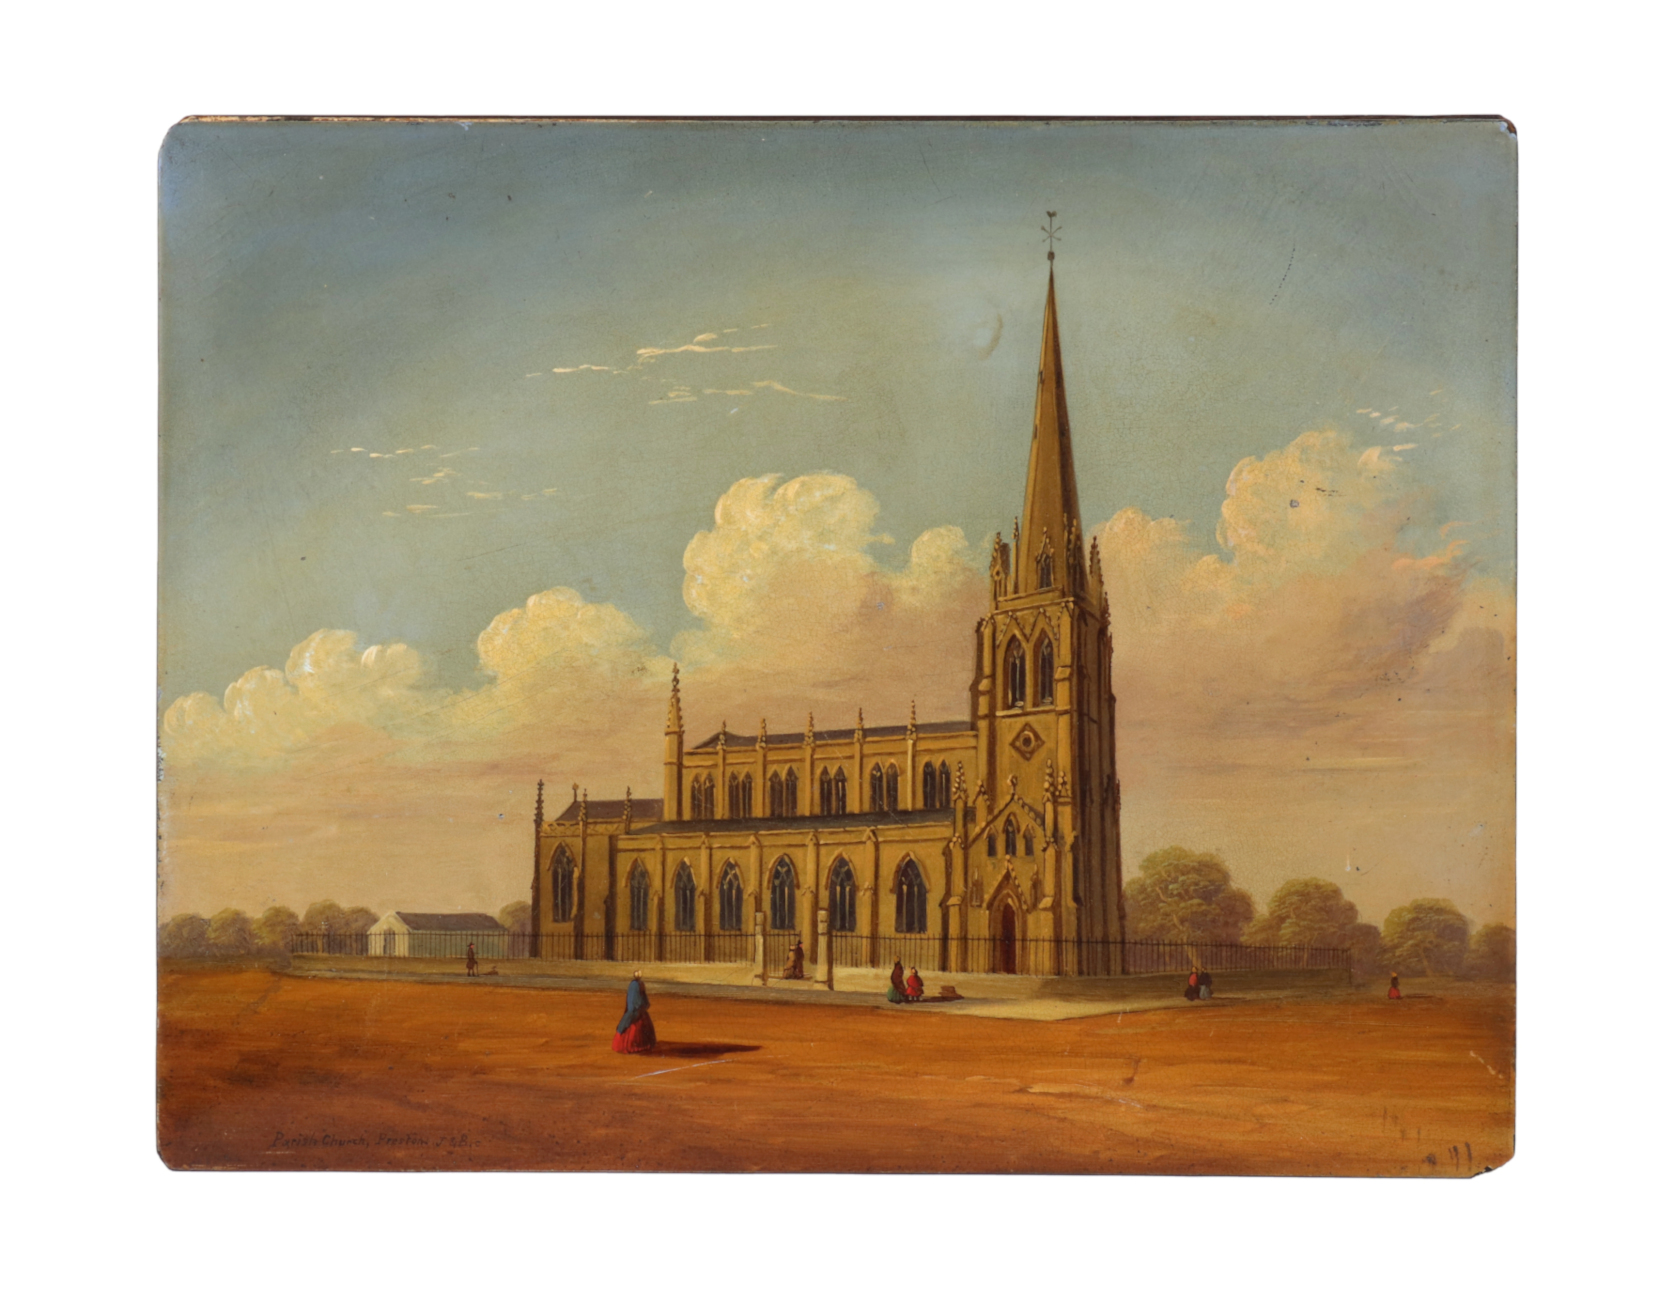 Jennens & Bettridge Papier Mache Desk Folio, "Parish Church, Preston", c. 1855